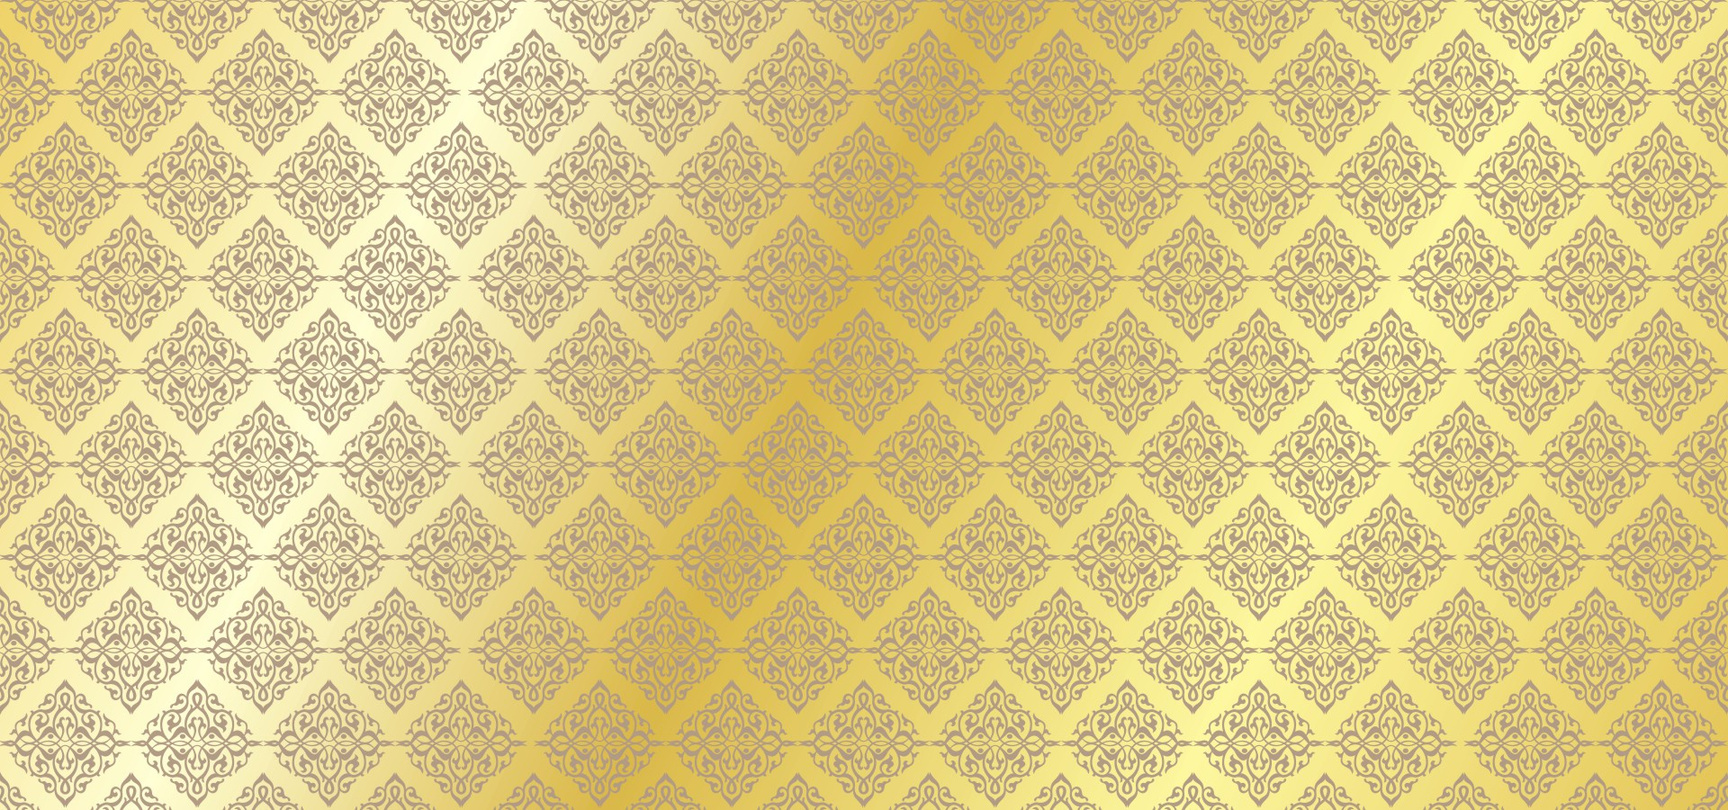 Gold Ornate Pattern Background